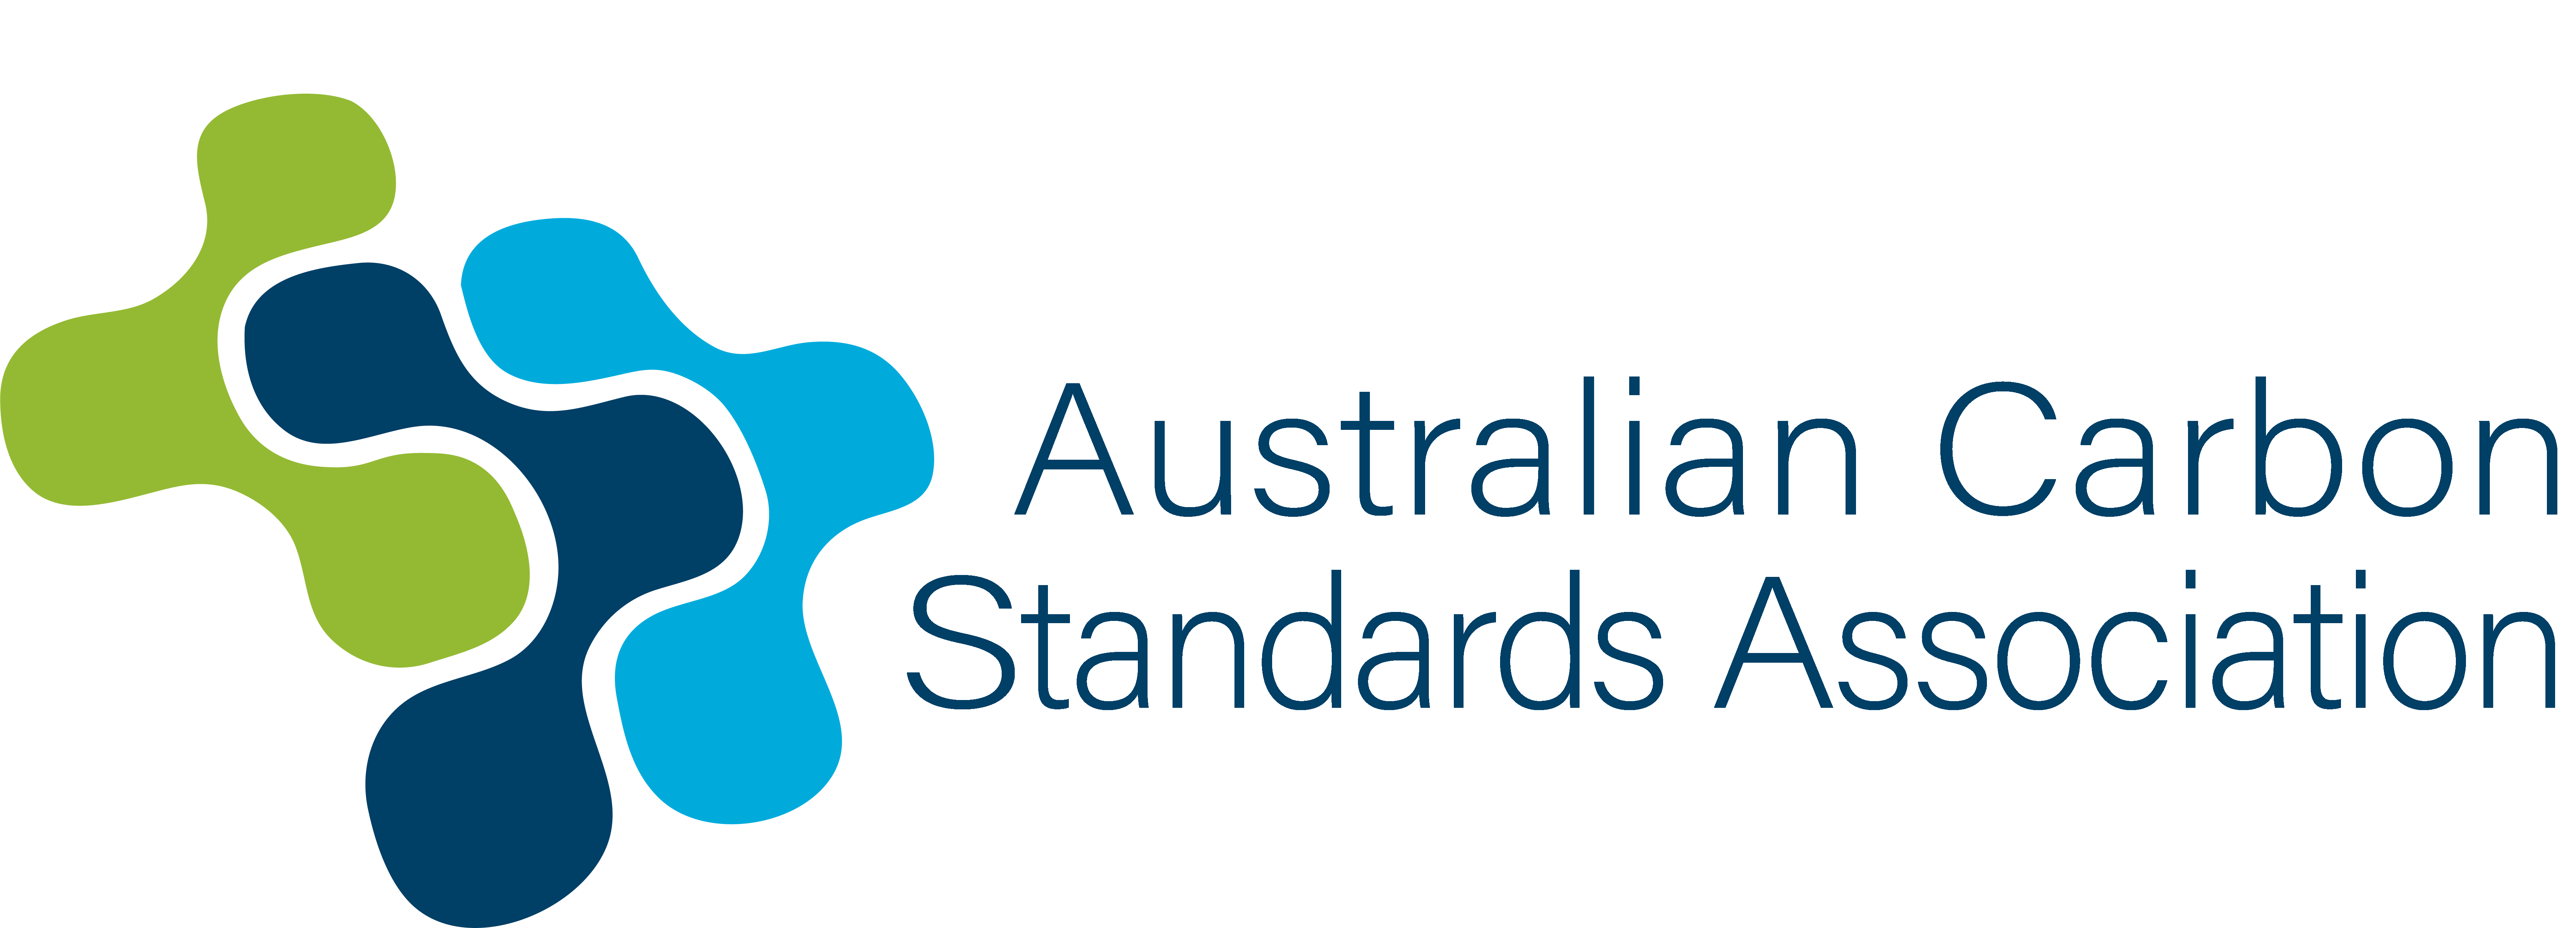 The Australian Carbon Standards Association